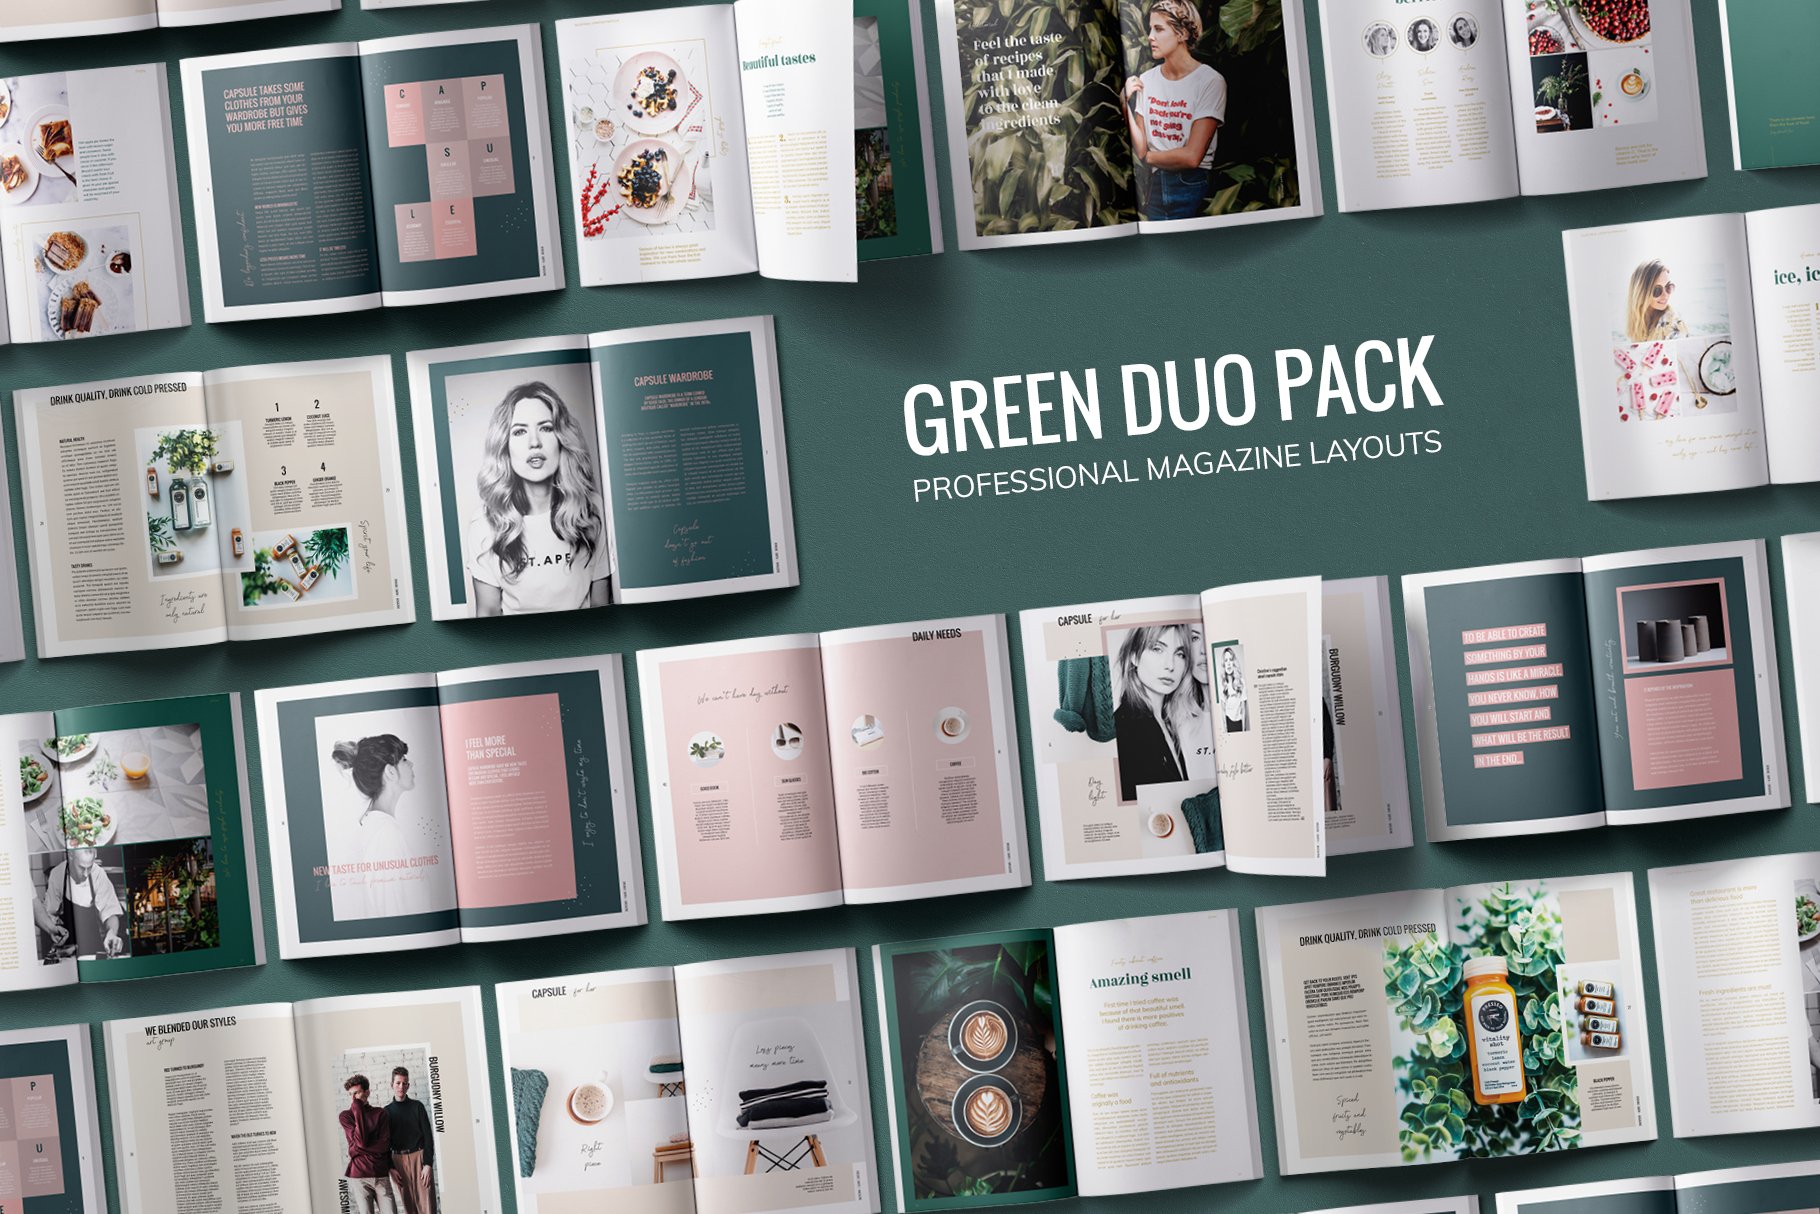 绿色烹饪料理男女服装营销INDD画册模板 Green Duo Pack Magazine Templates插图